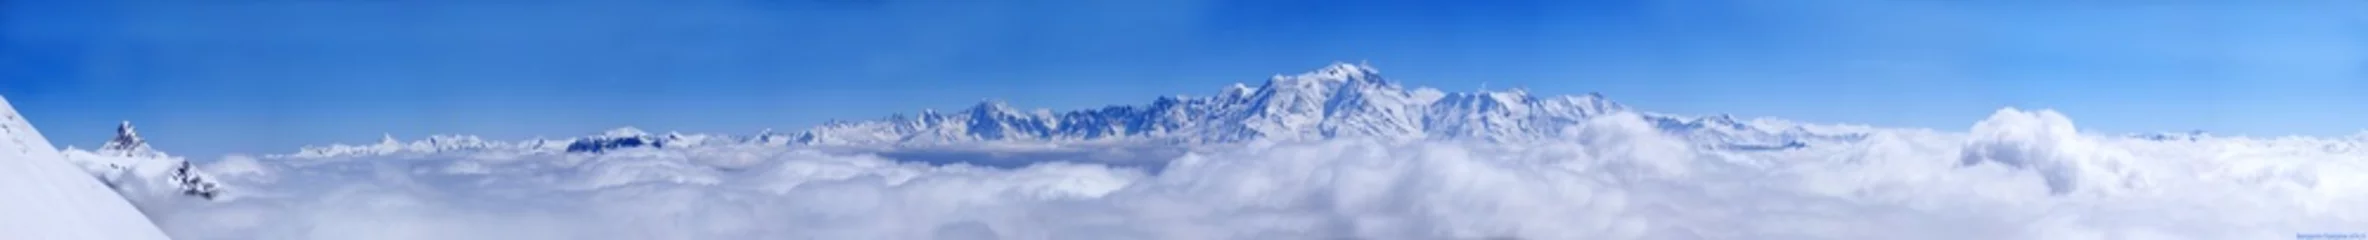 Selbstklebende Fototapete Mont Blanc mont blanc landscape